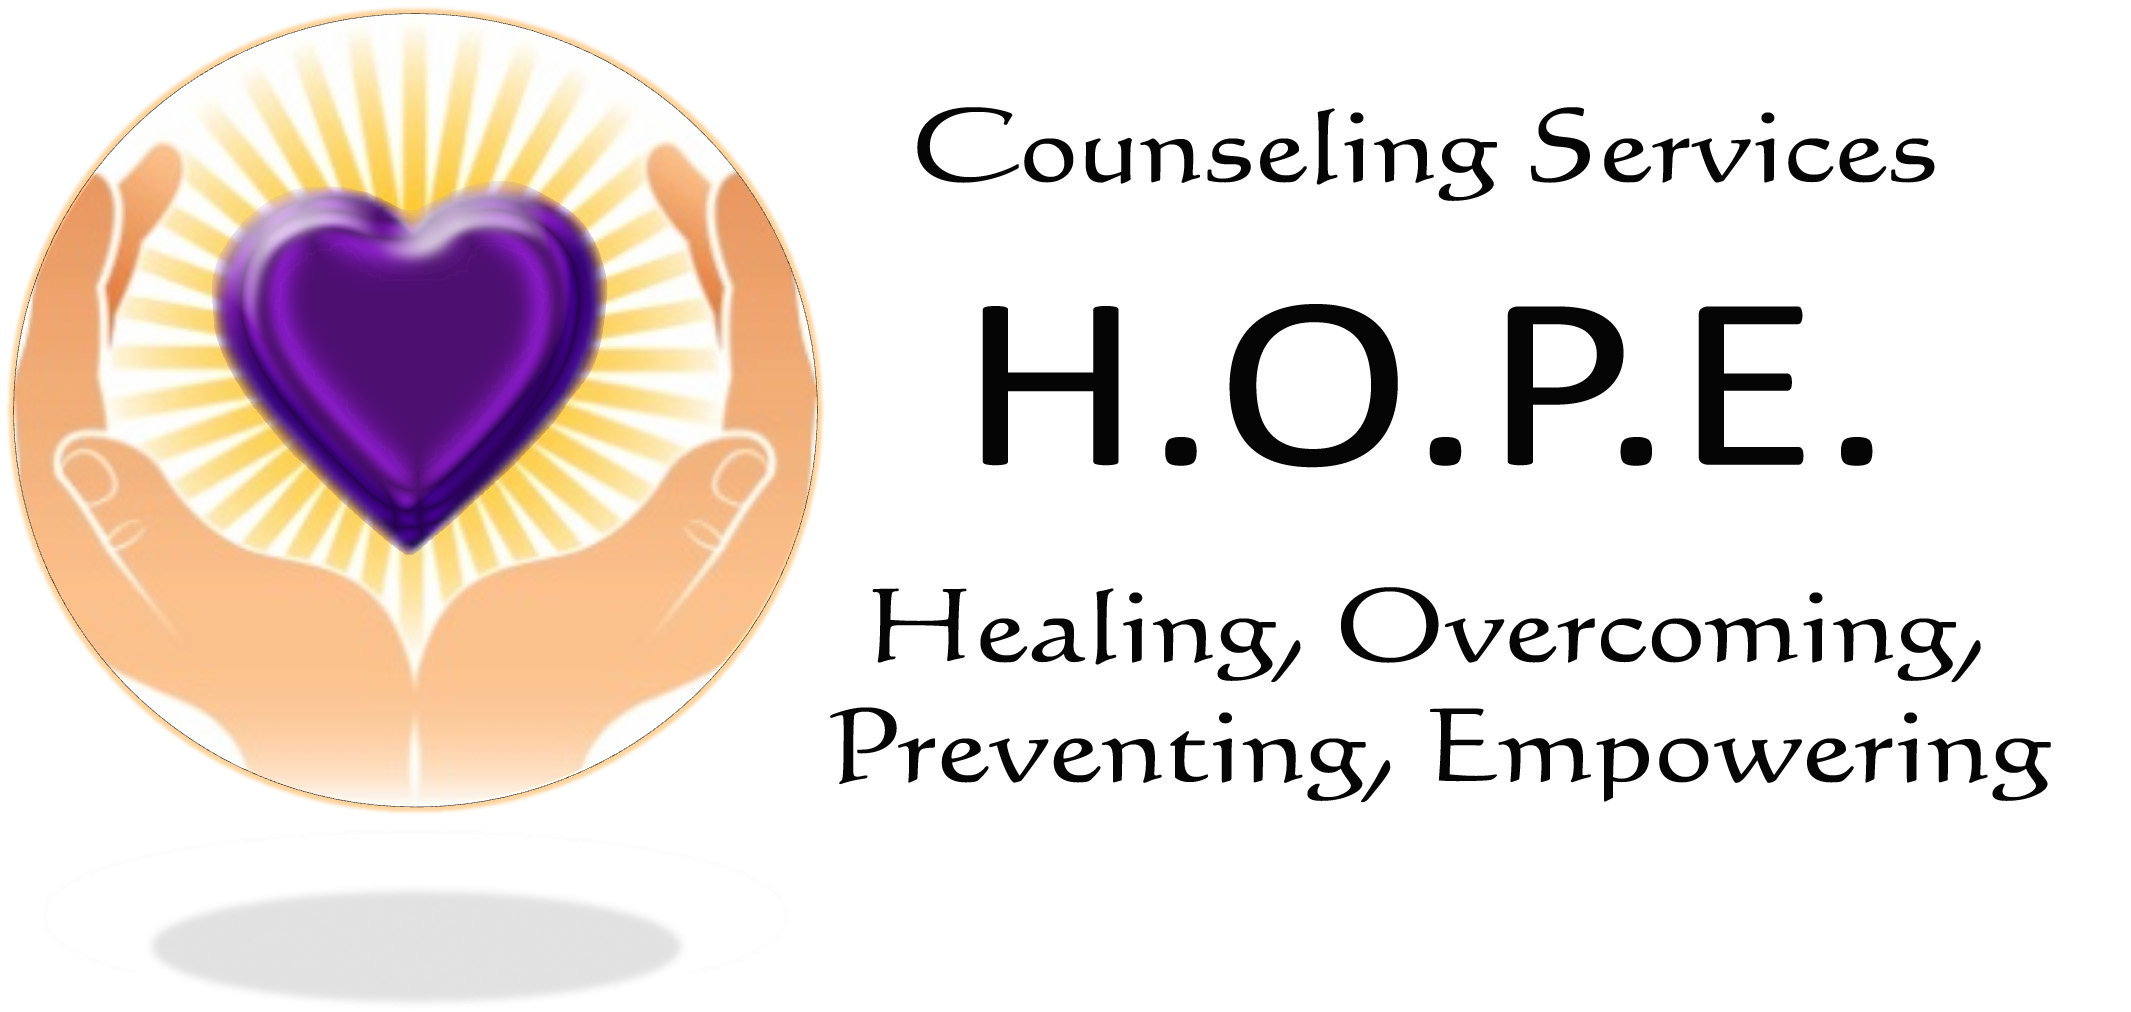 Healing, Overcoming, Preventing, Empowering